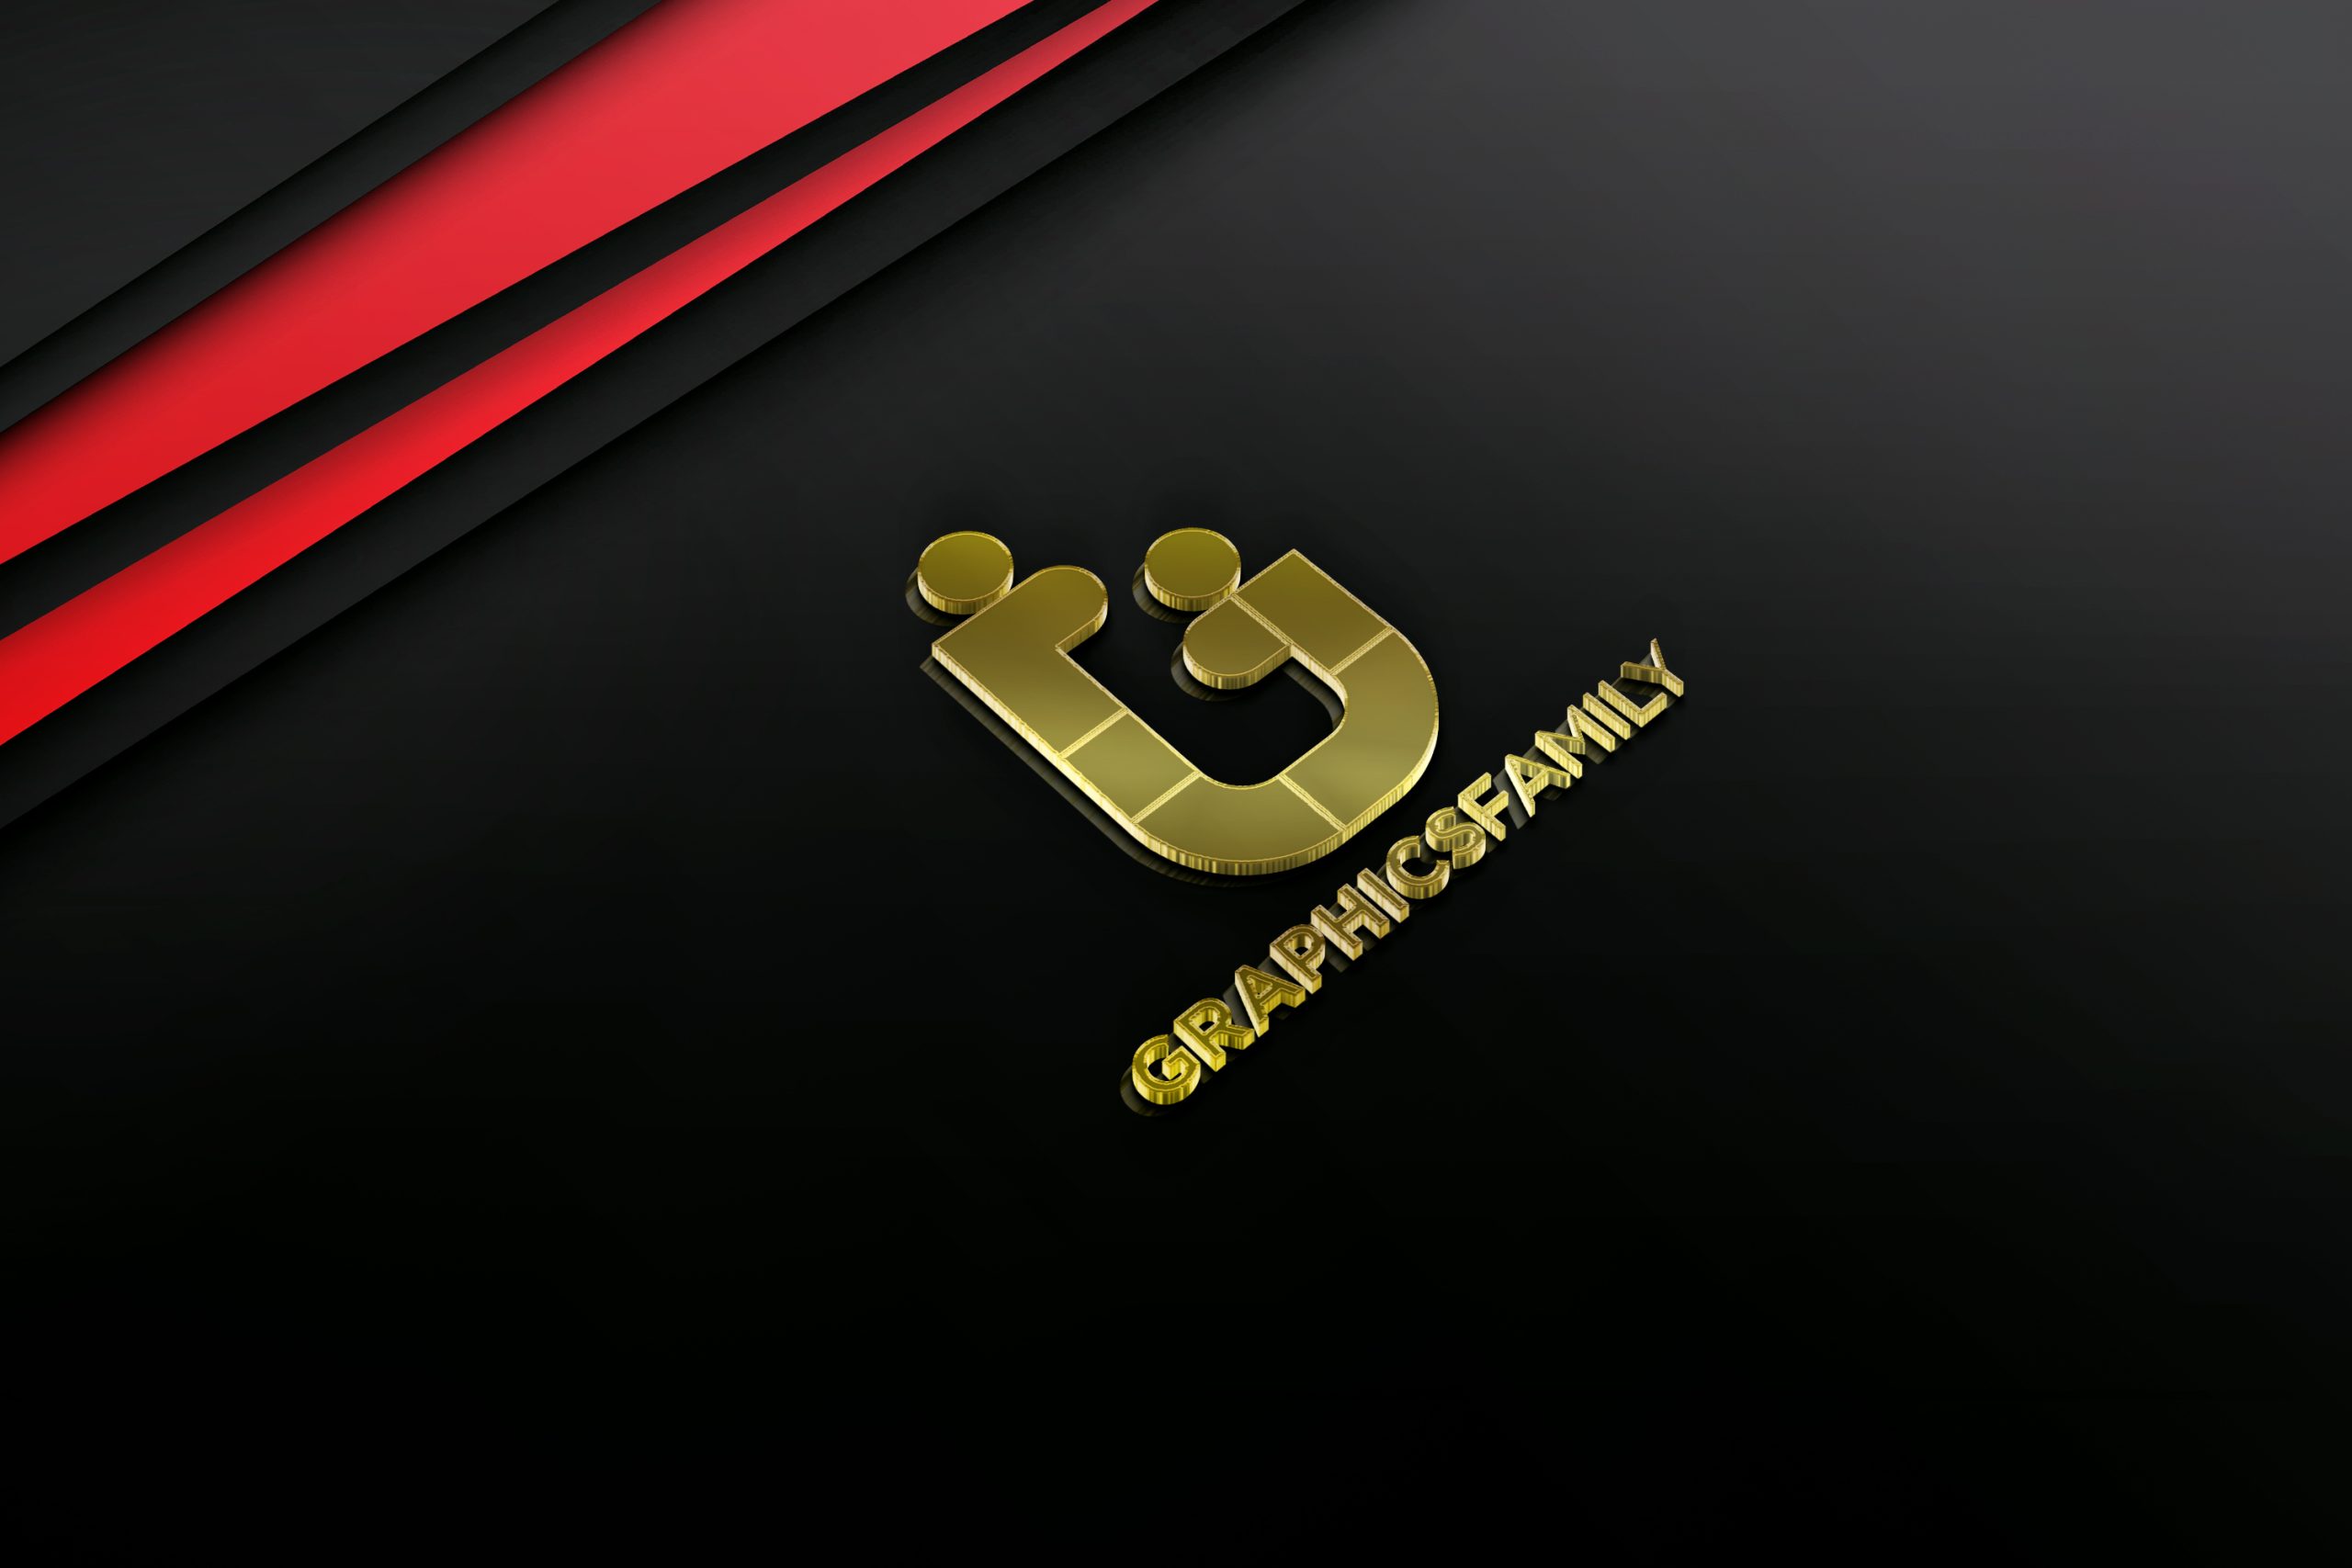 Free Download 3D Gold metallic logo mockup on Black Background